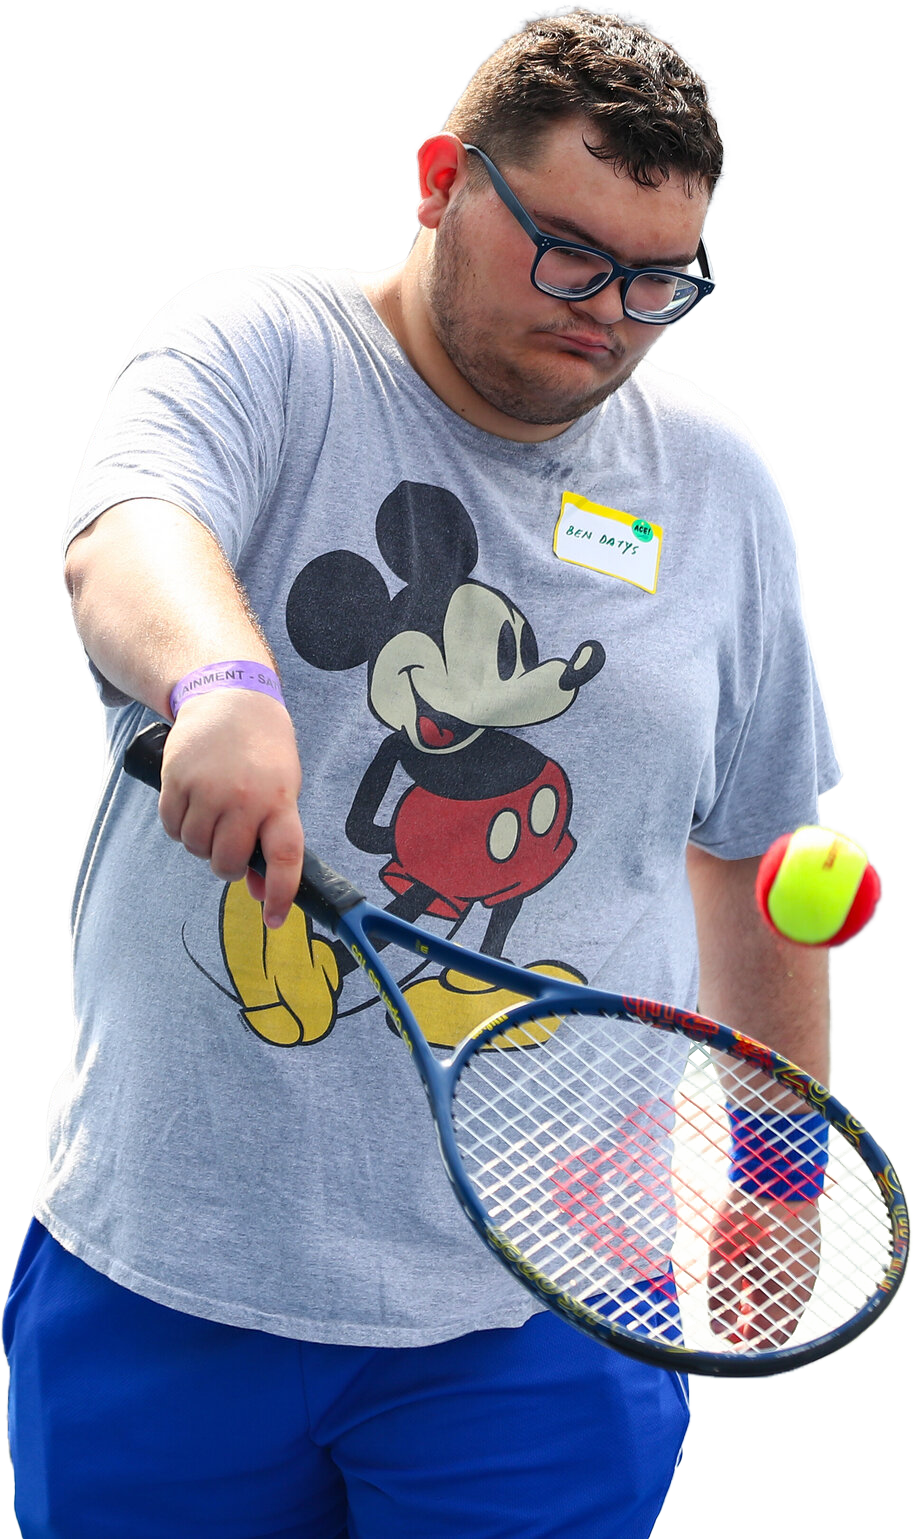 Male tennis player hitting a red tennis ball.